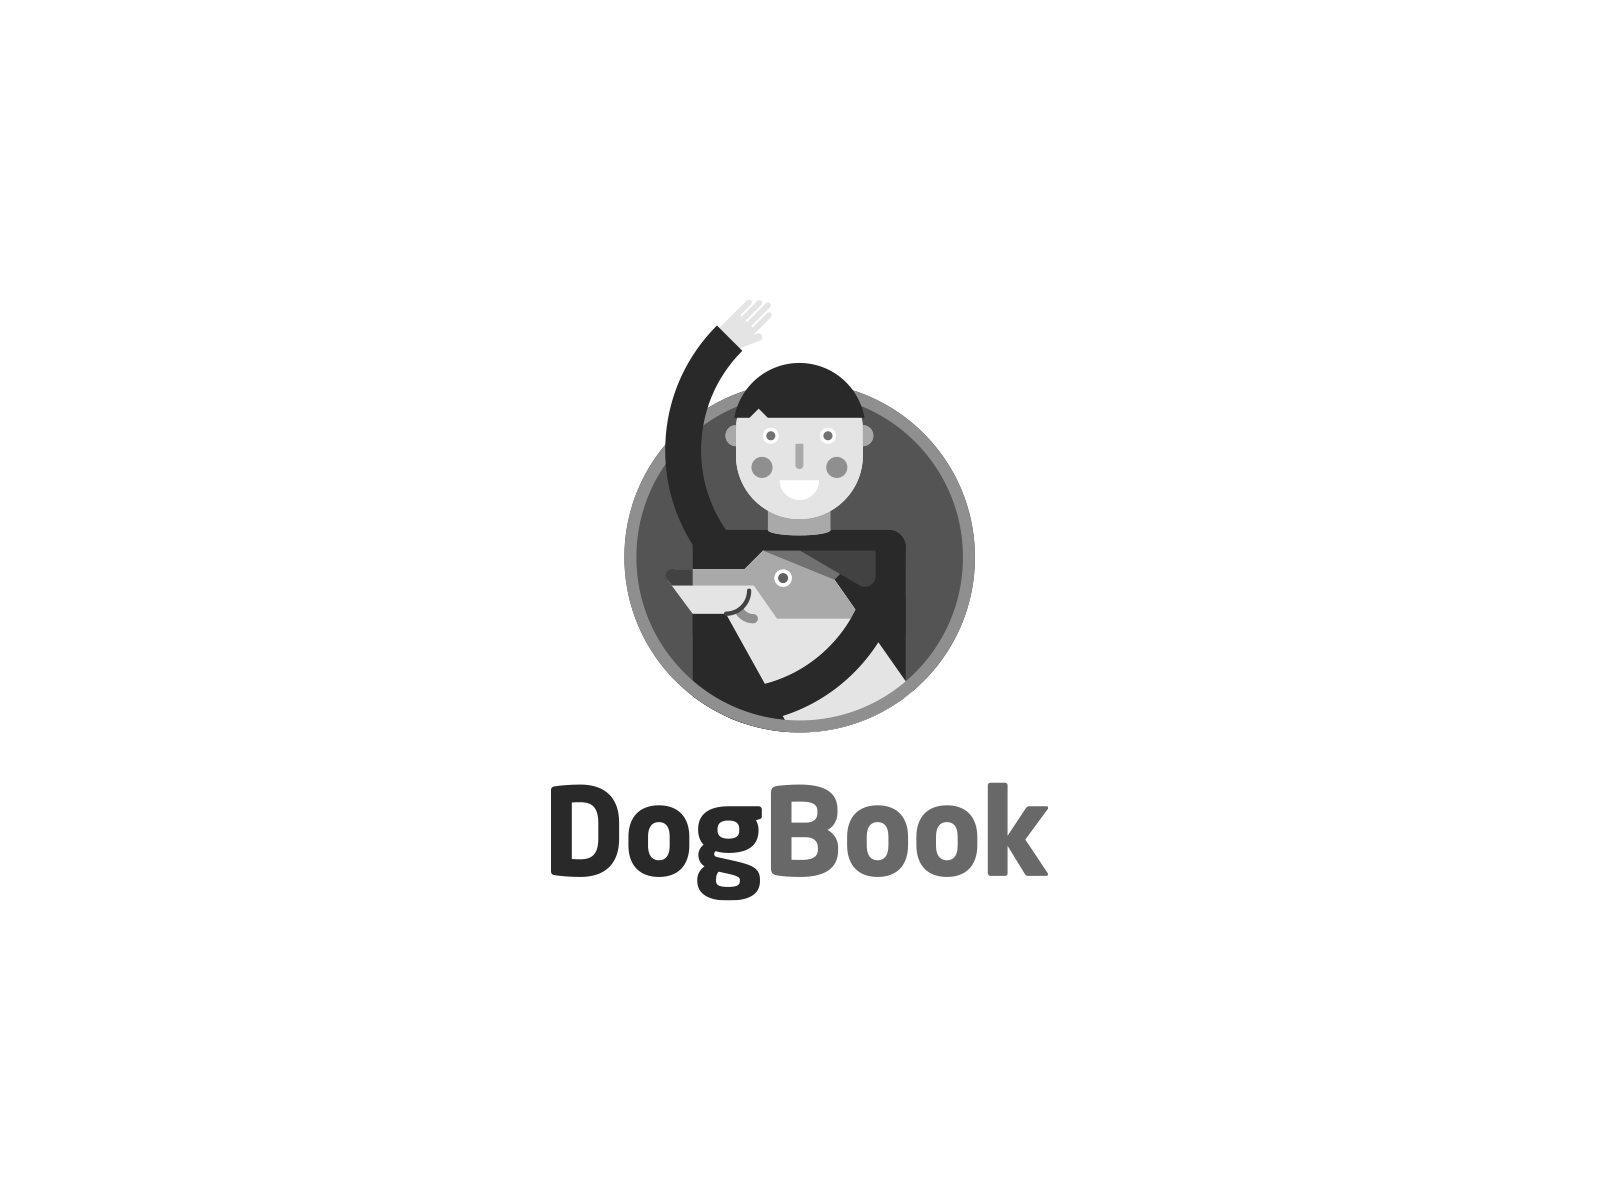 200325_logo_DogBook